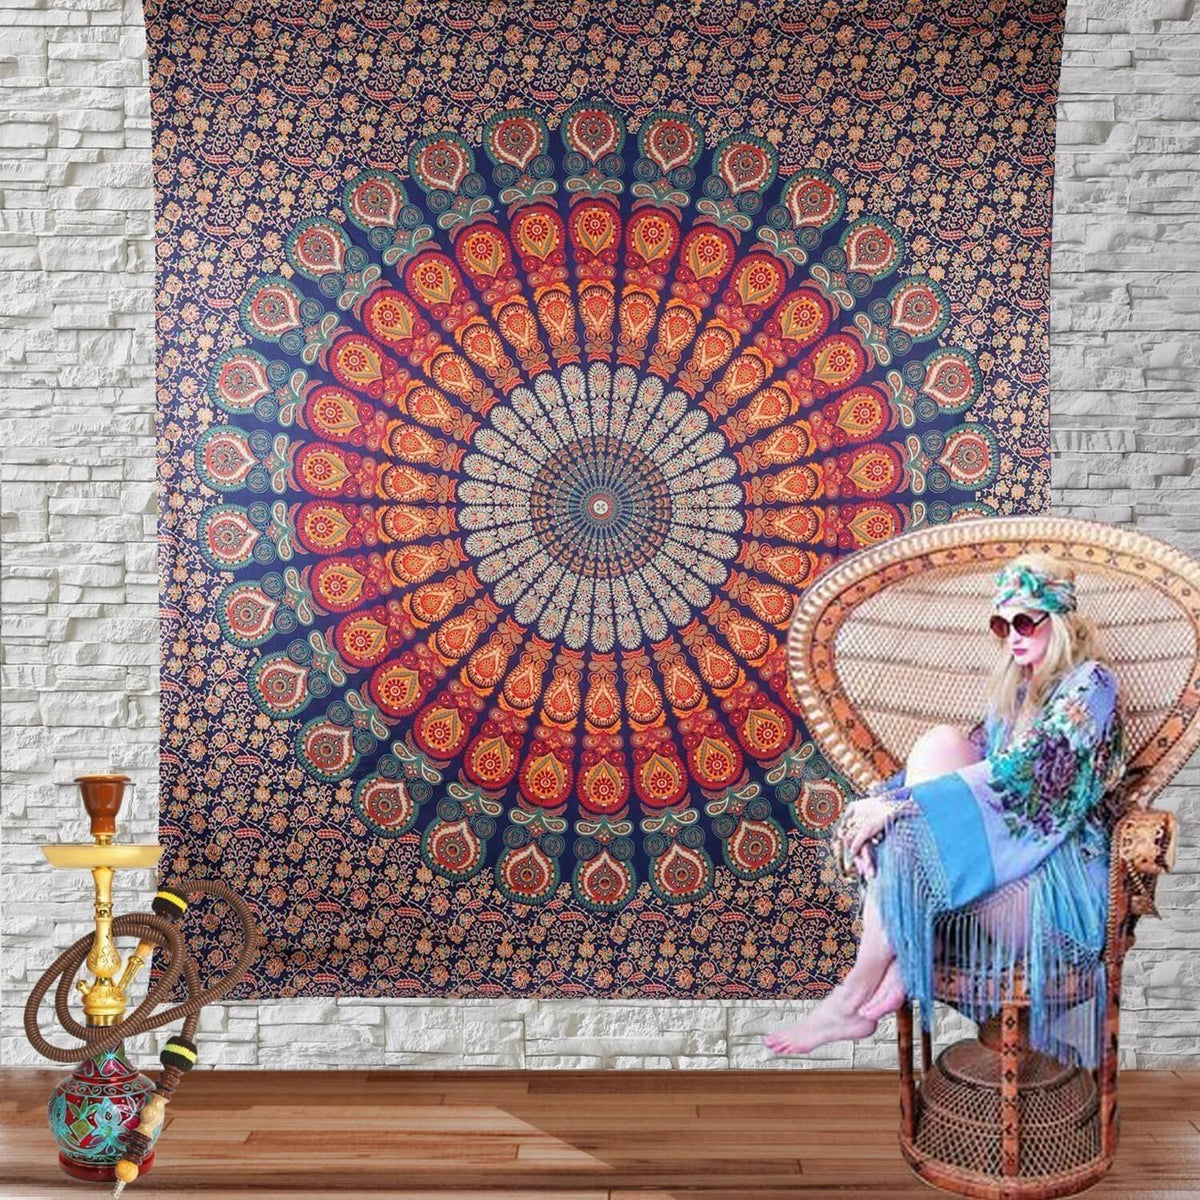 Embrace Serenity Blue Feather Bohemian Mandala Tapestry - rainbowhandicraft